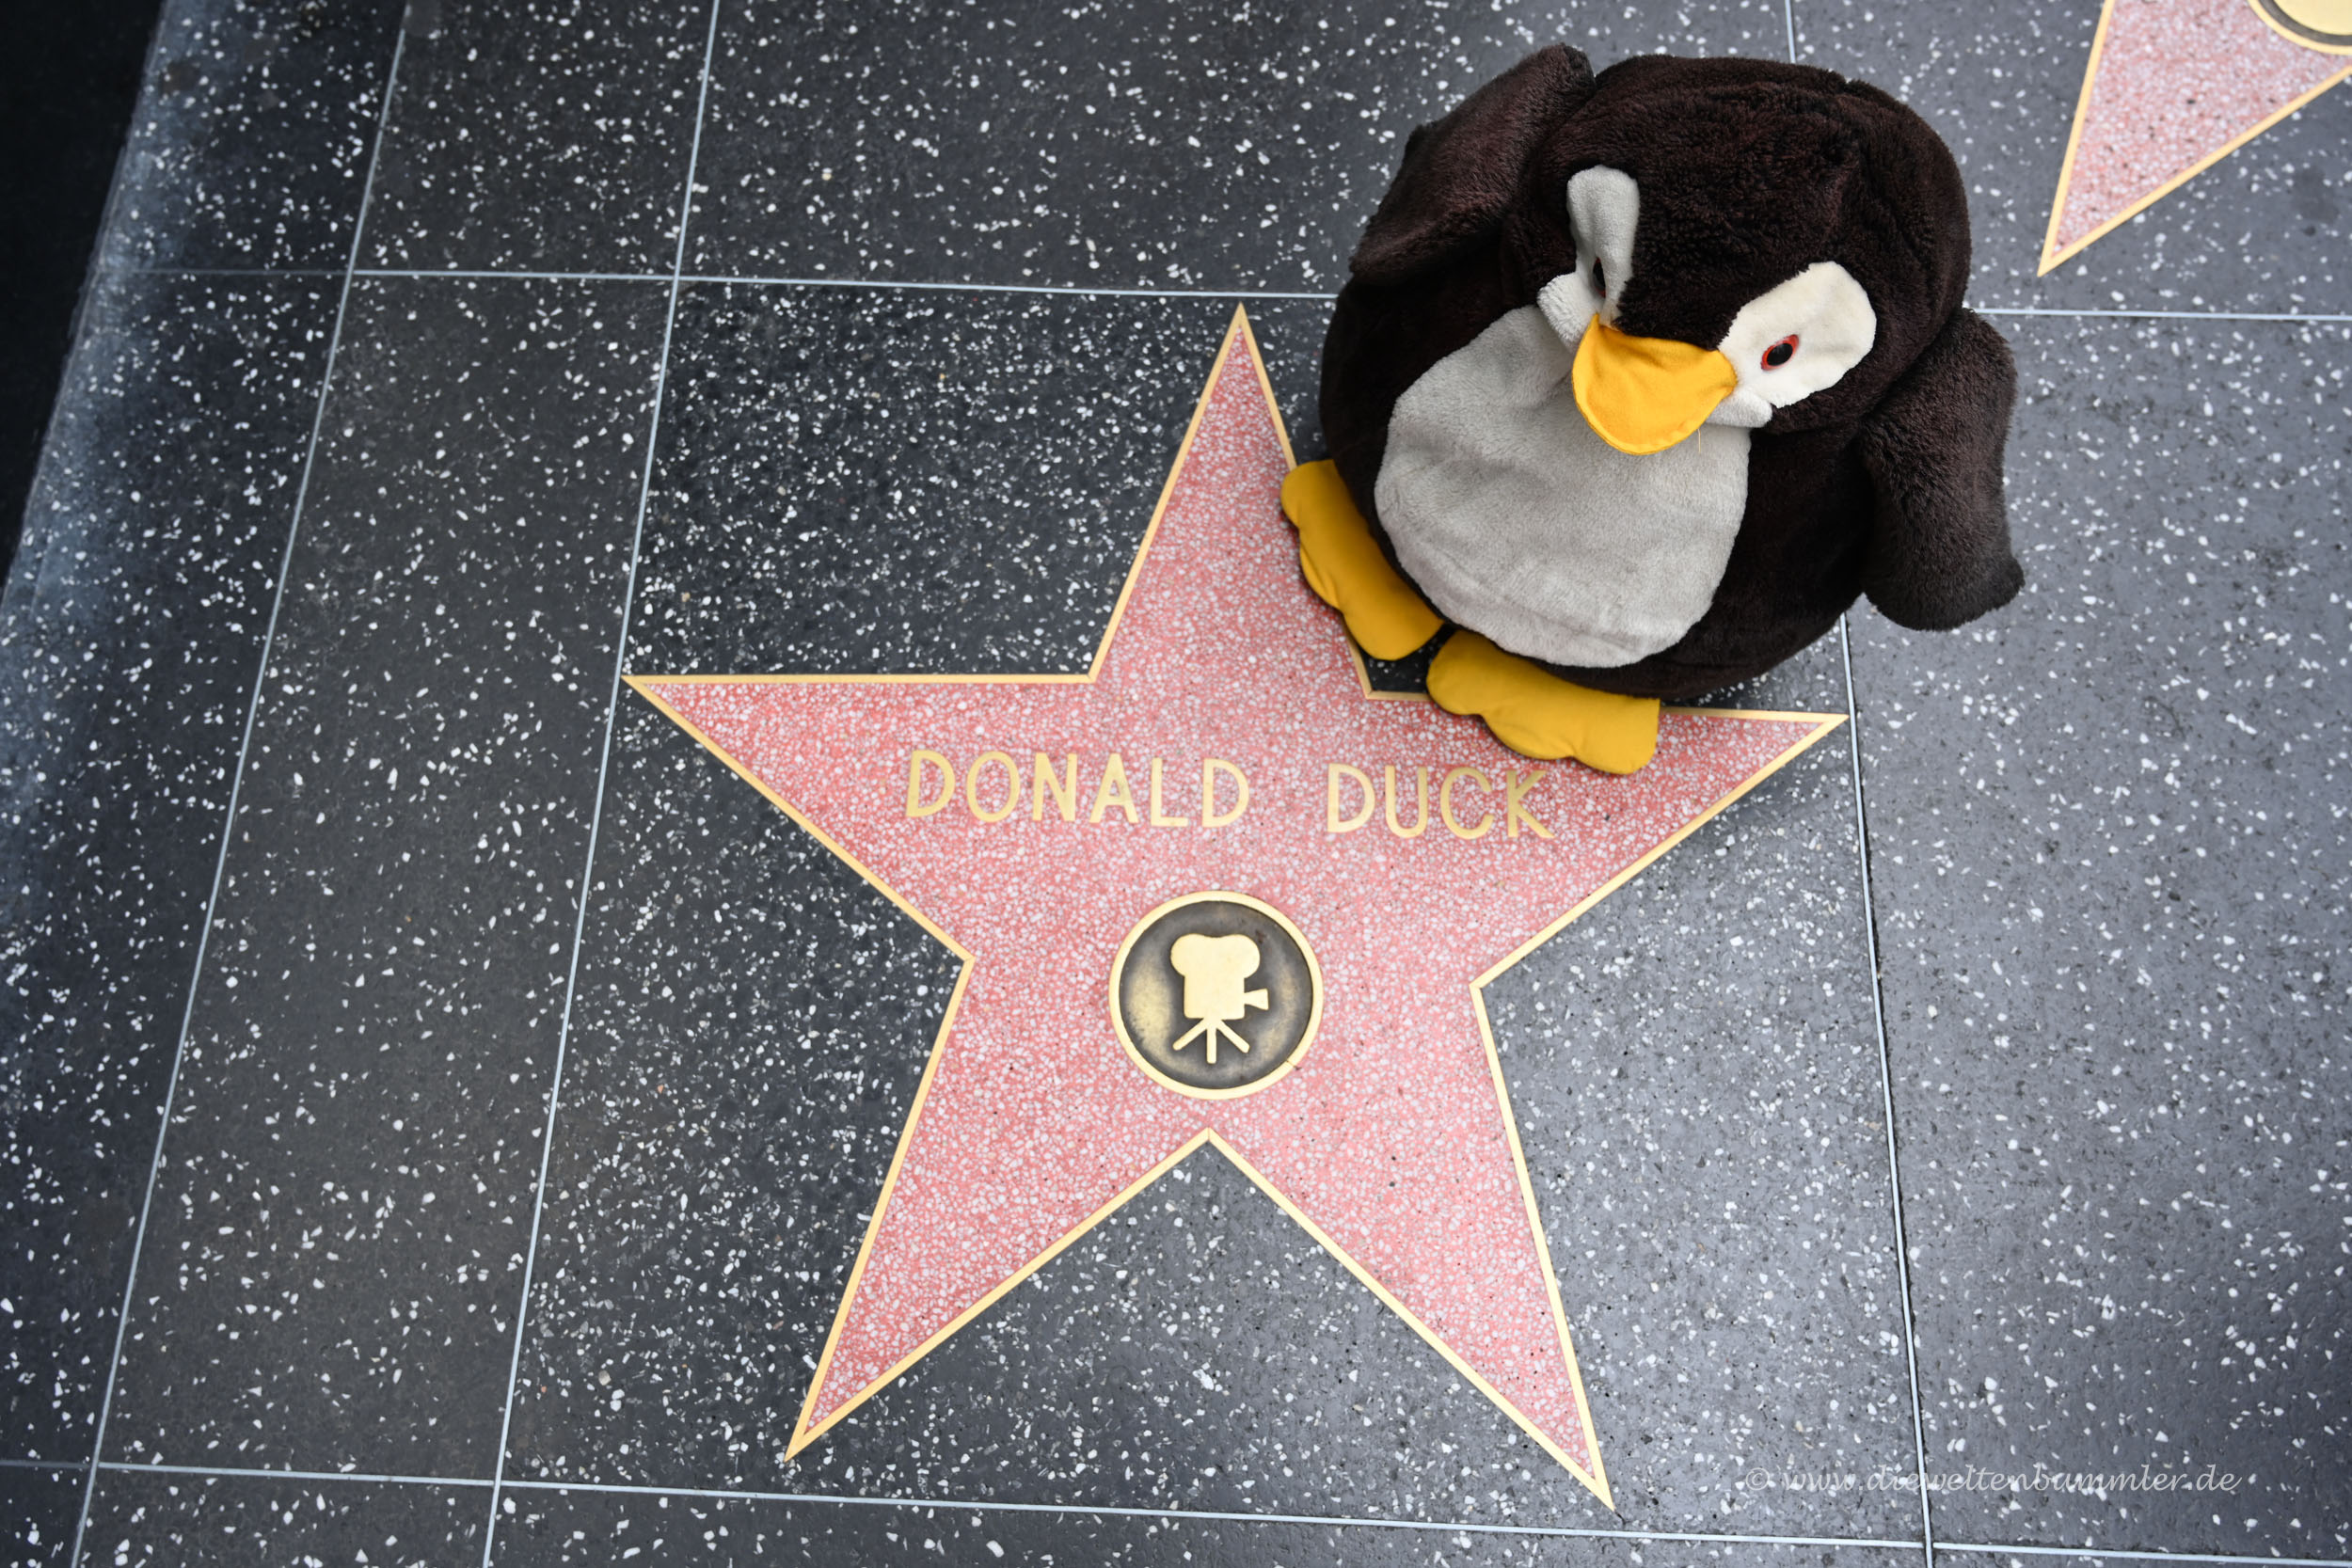 Walk of Fame - Donald Duck